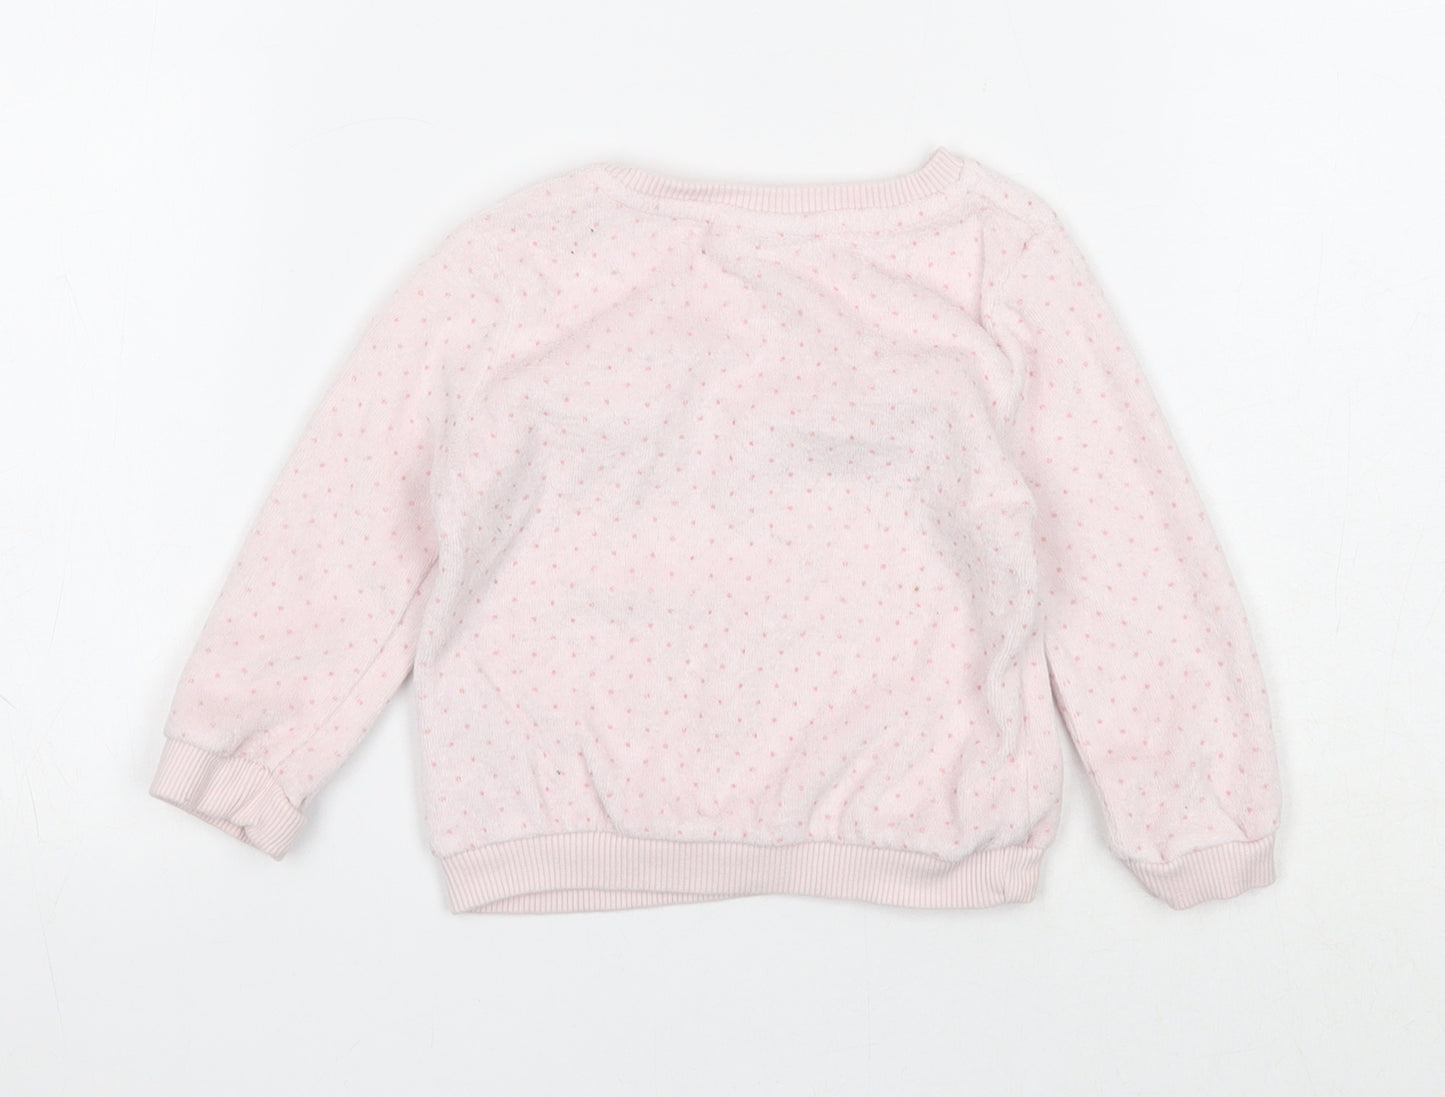 Preworn Girls Pink Polka Dot Cotton Pullover Jumper Size 9-12 Months Pullover